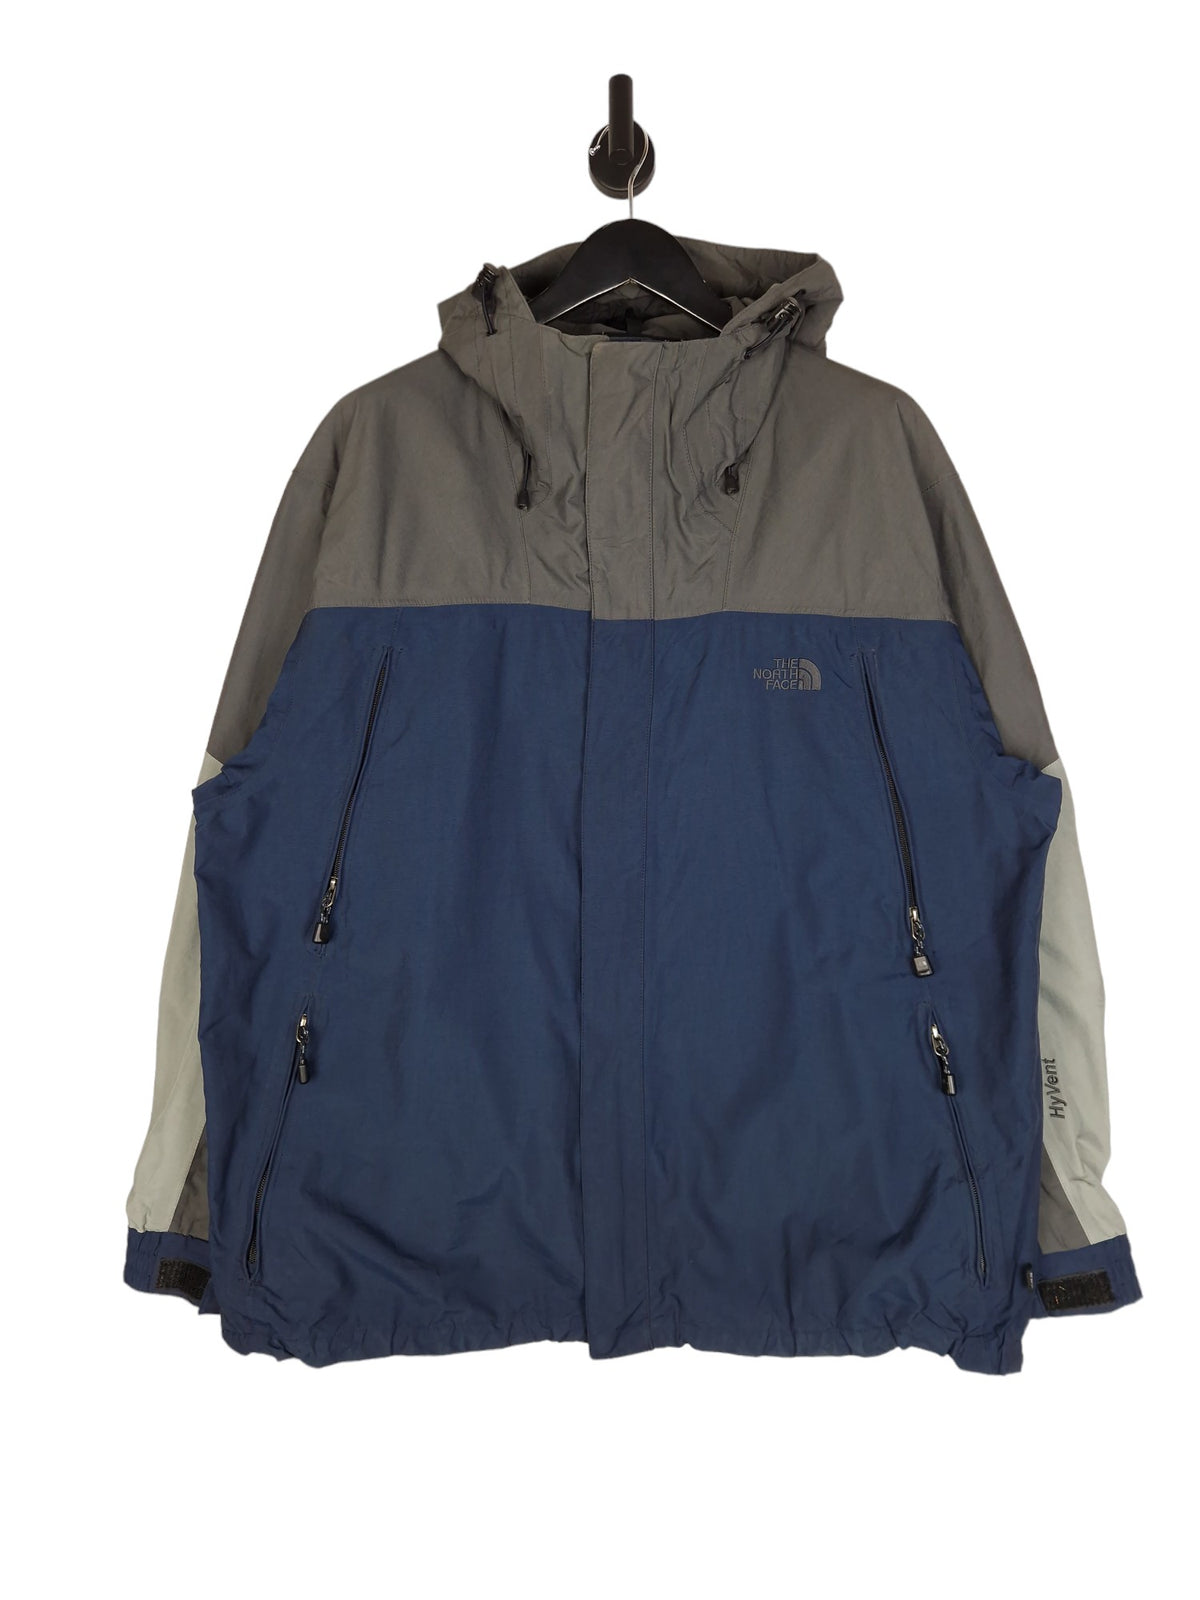 The North Face Hyvent Rain Jacket - Size  XL